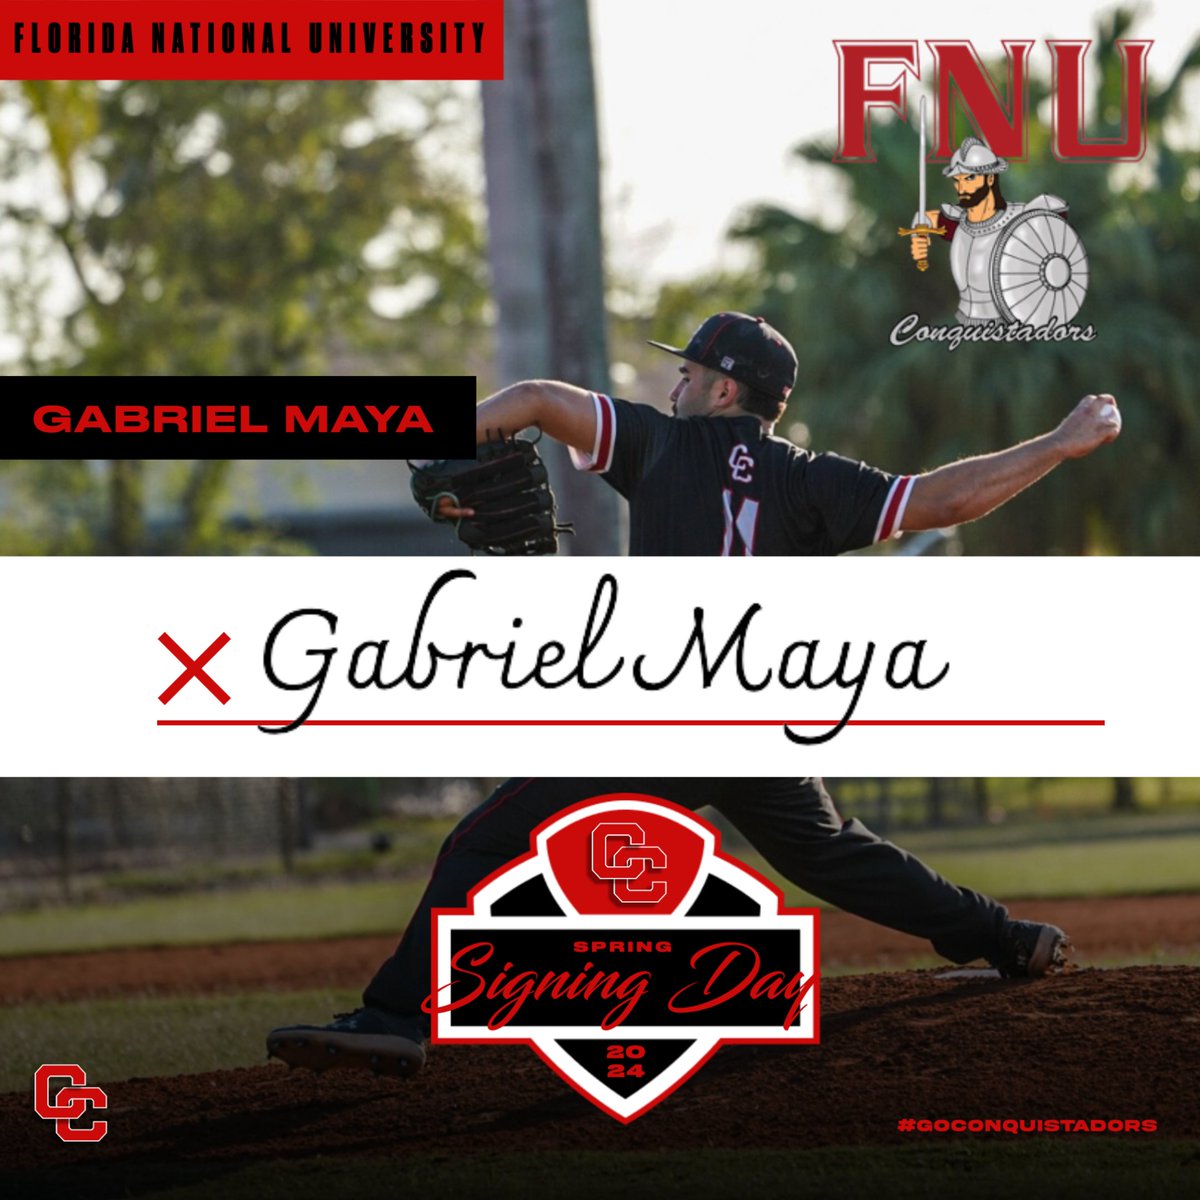 Congratulations to Gabriel Maya who will be signing with Florida National University today to play NAIA baseball. @Principal_CCHS @CooperCityHigh